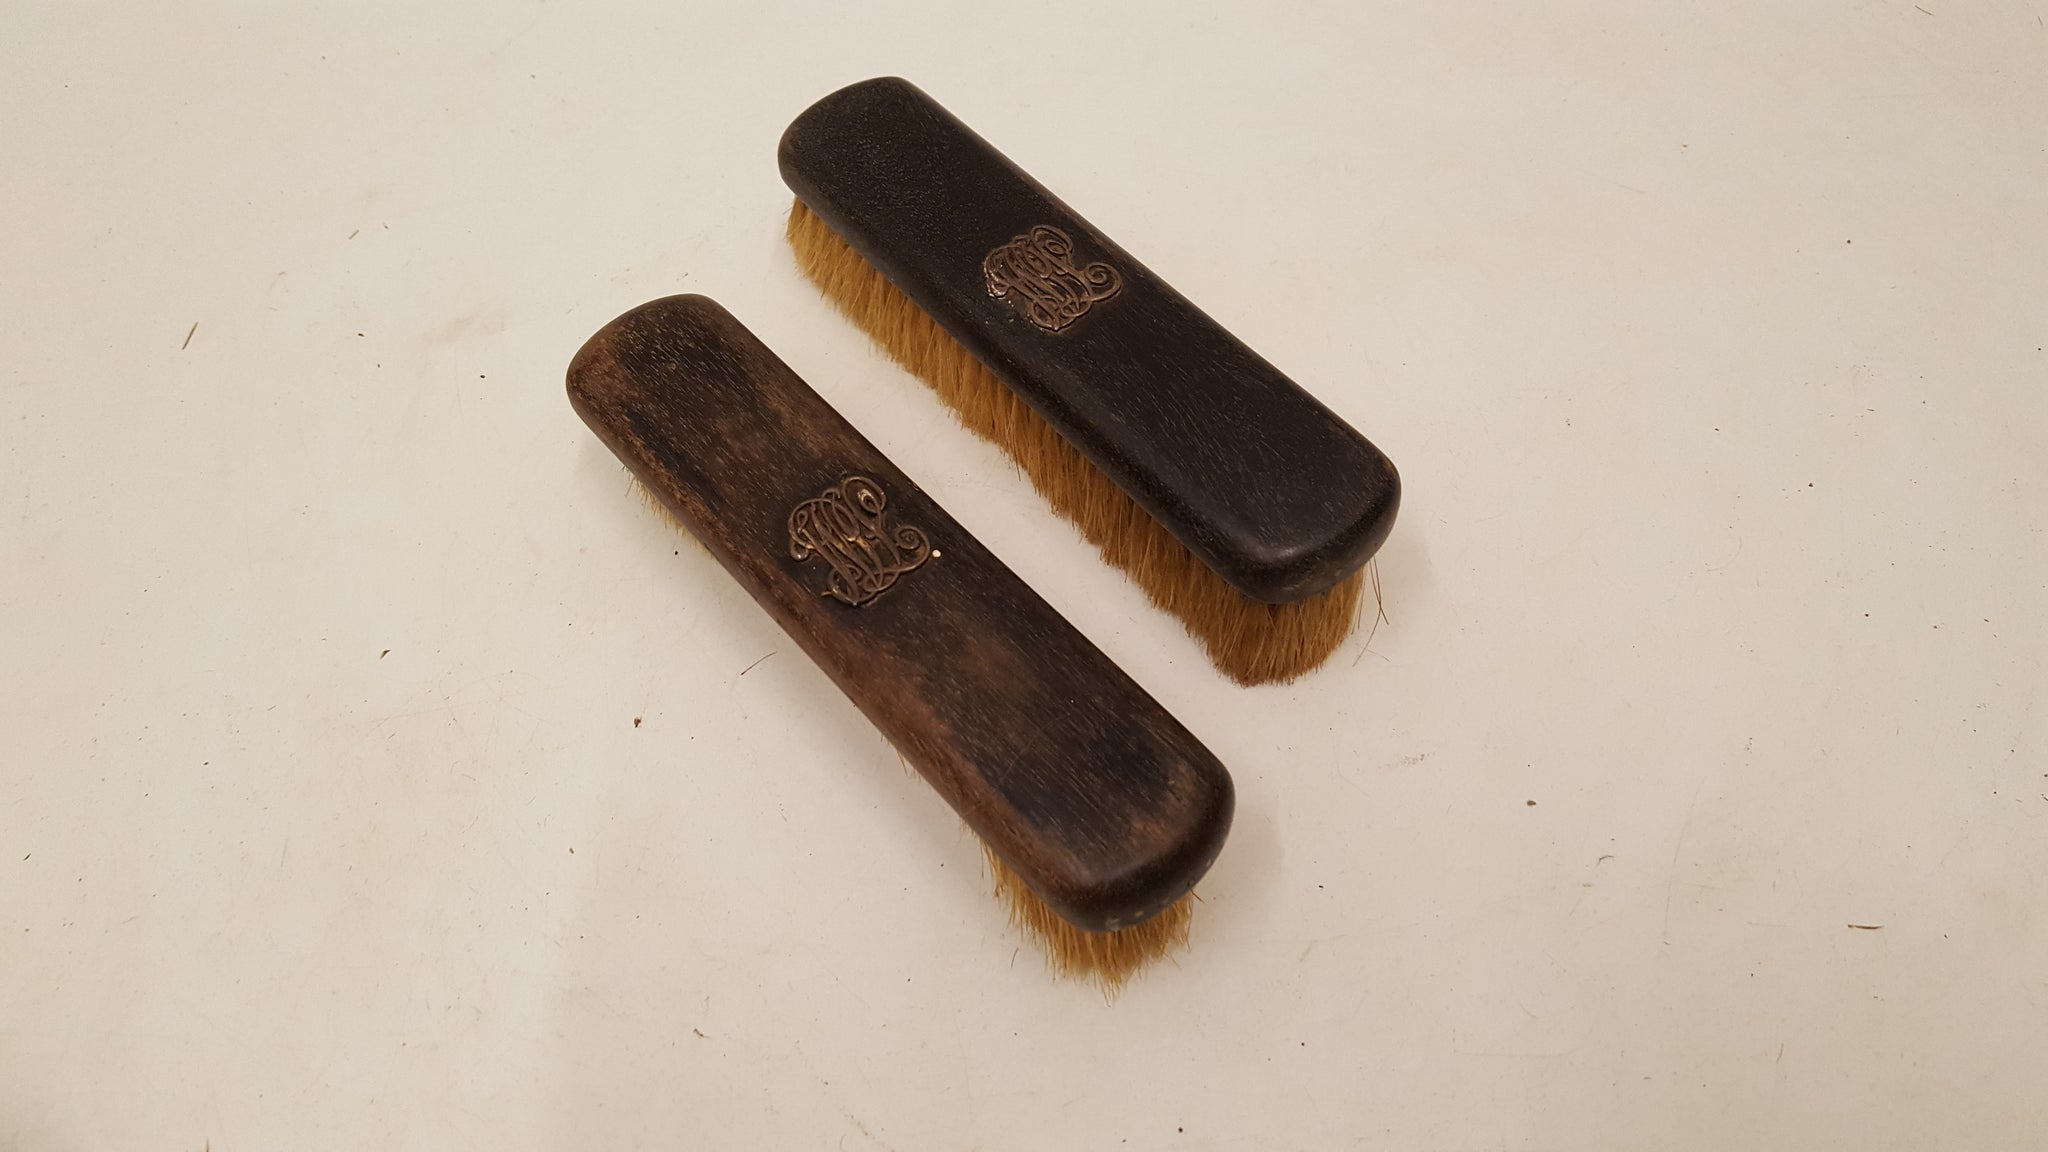 Lovely Pair of Vintage Boot Brush w Soft Bristles 38902